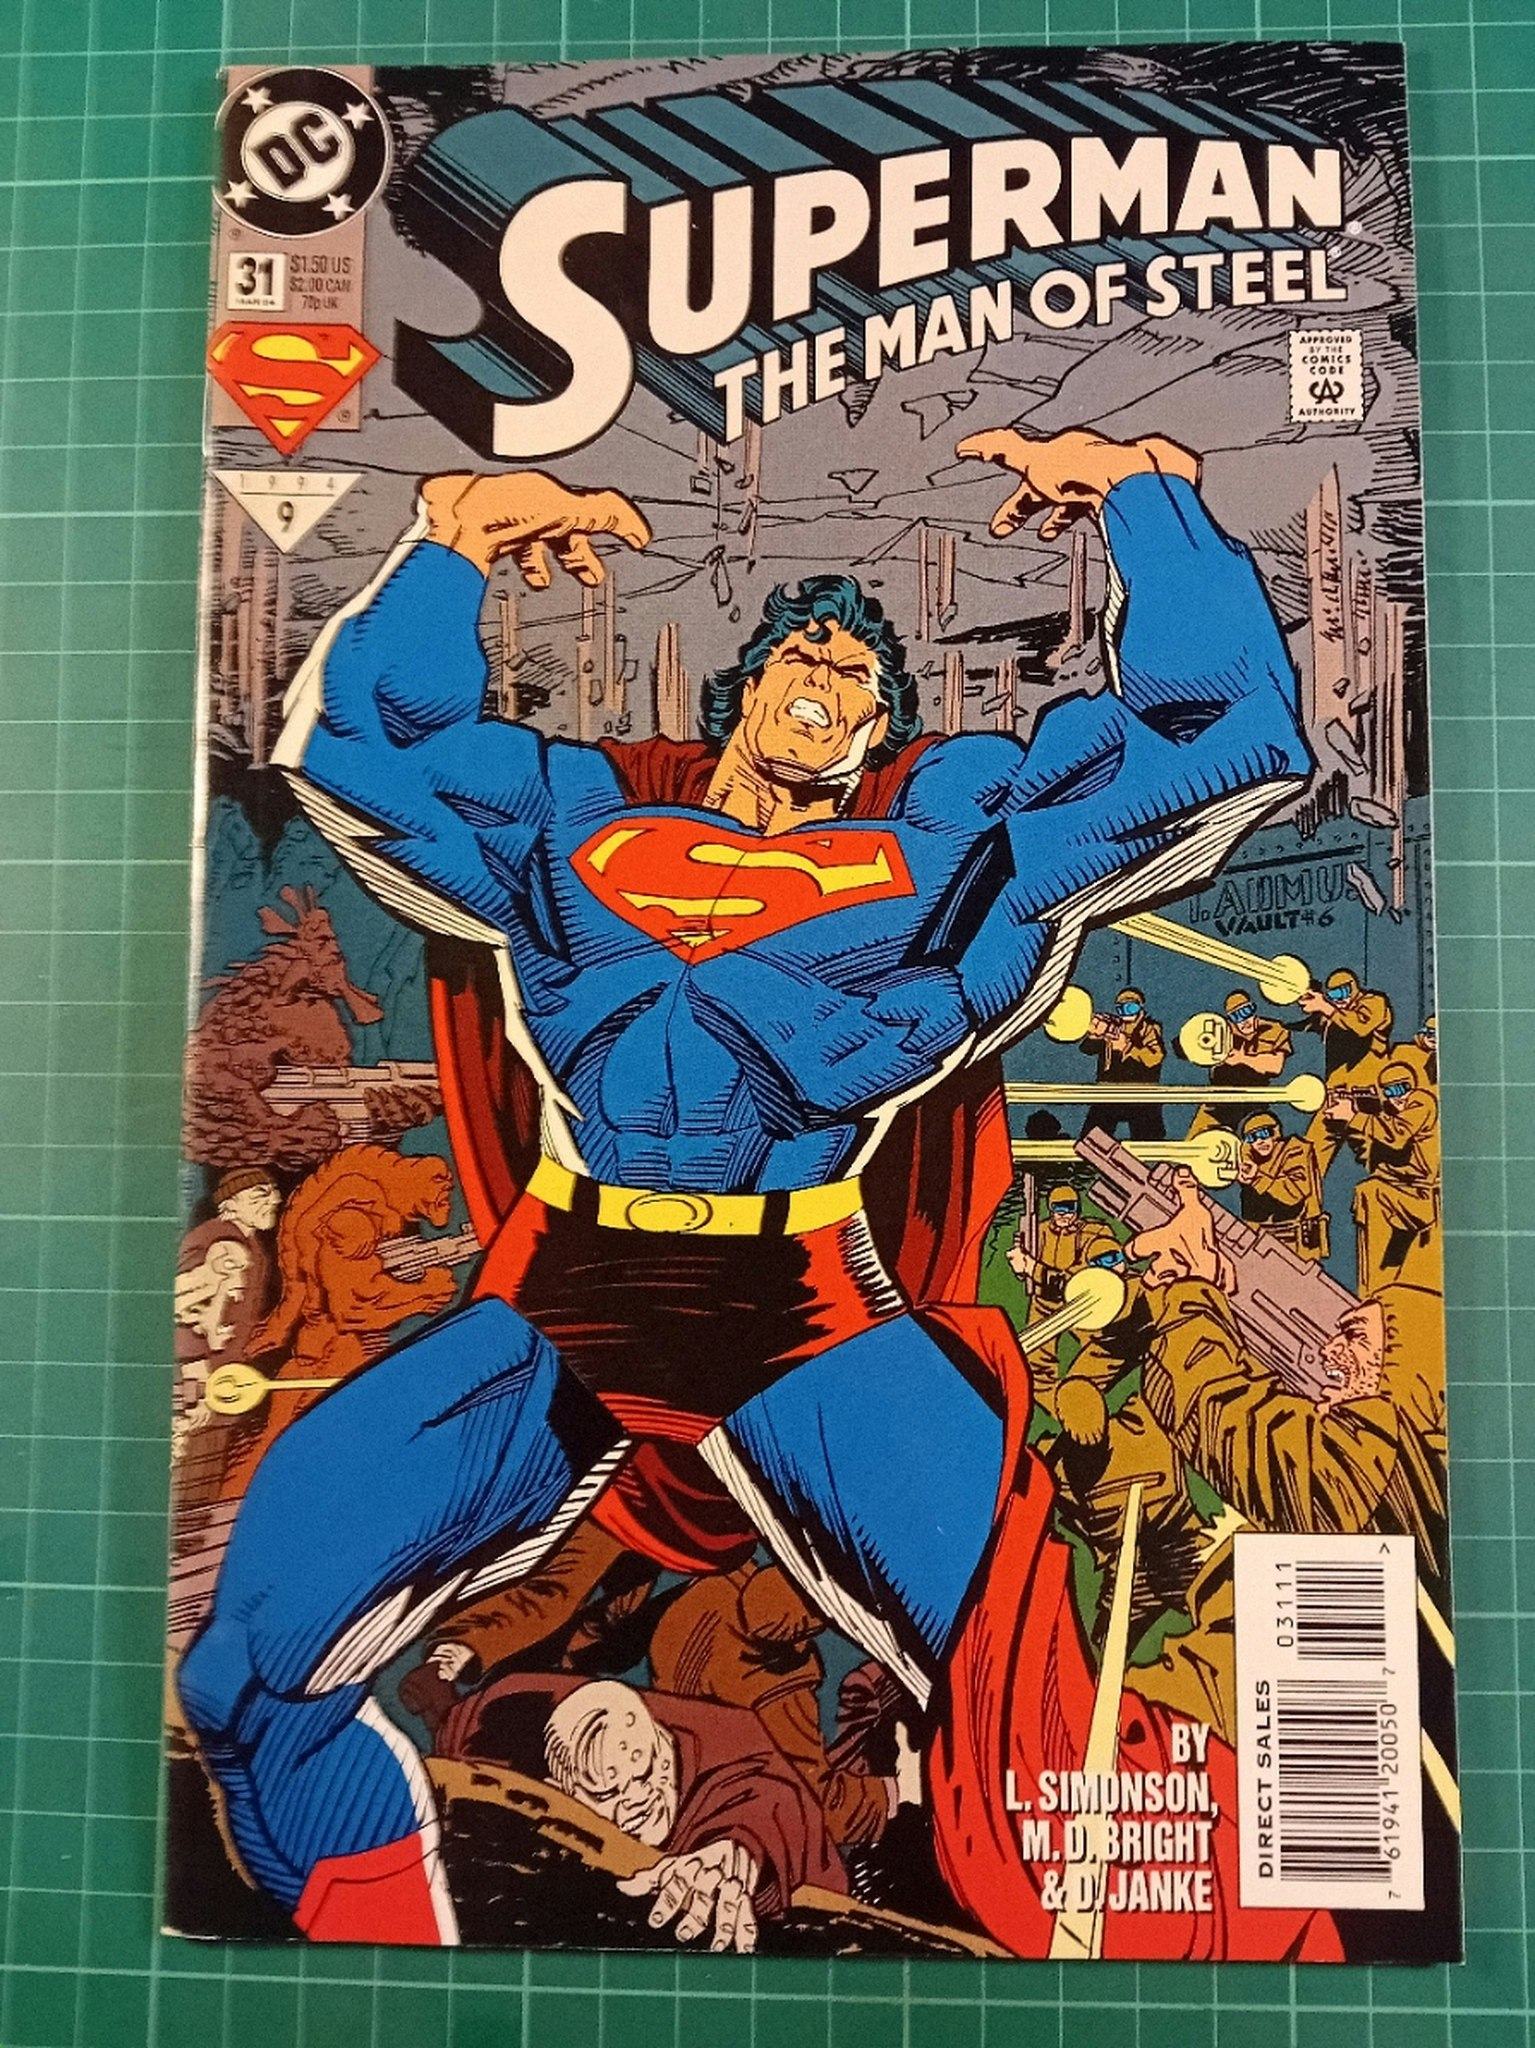 Superman the man of steel #31